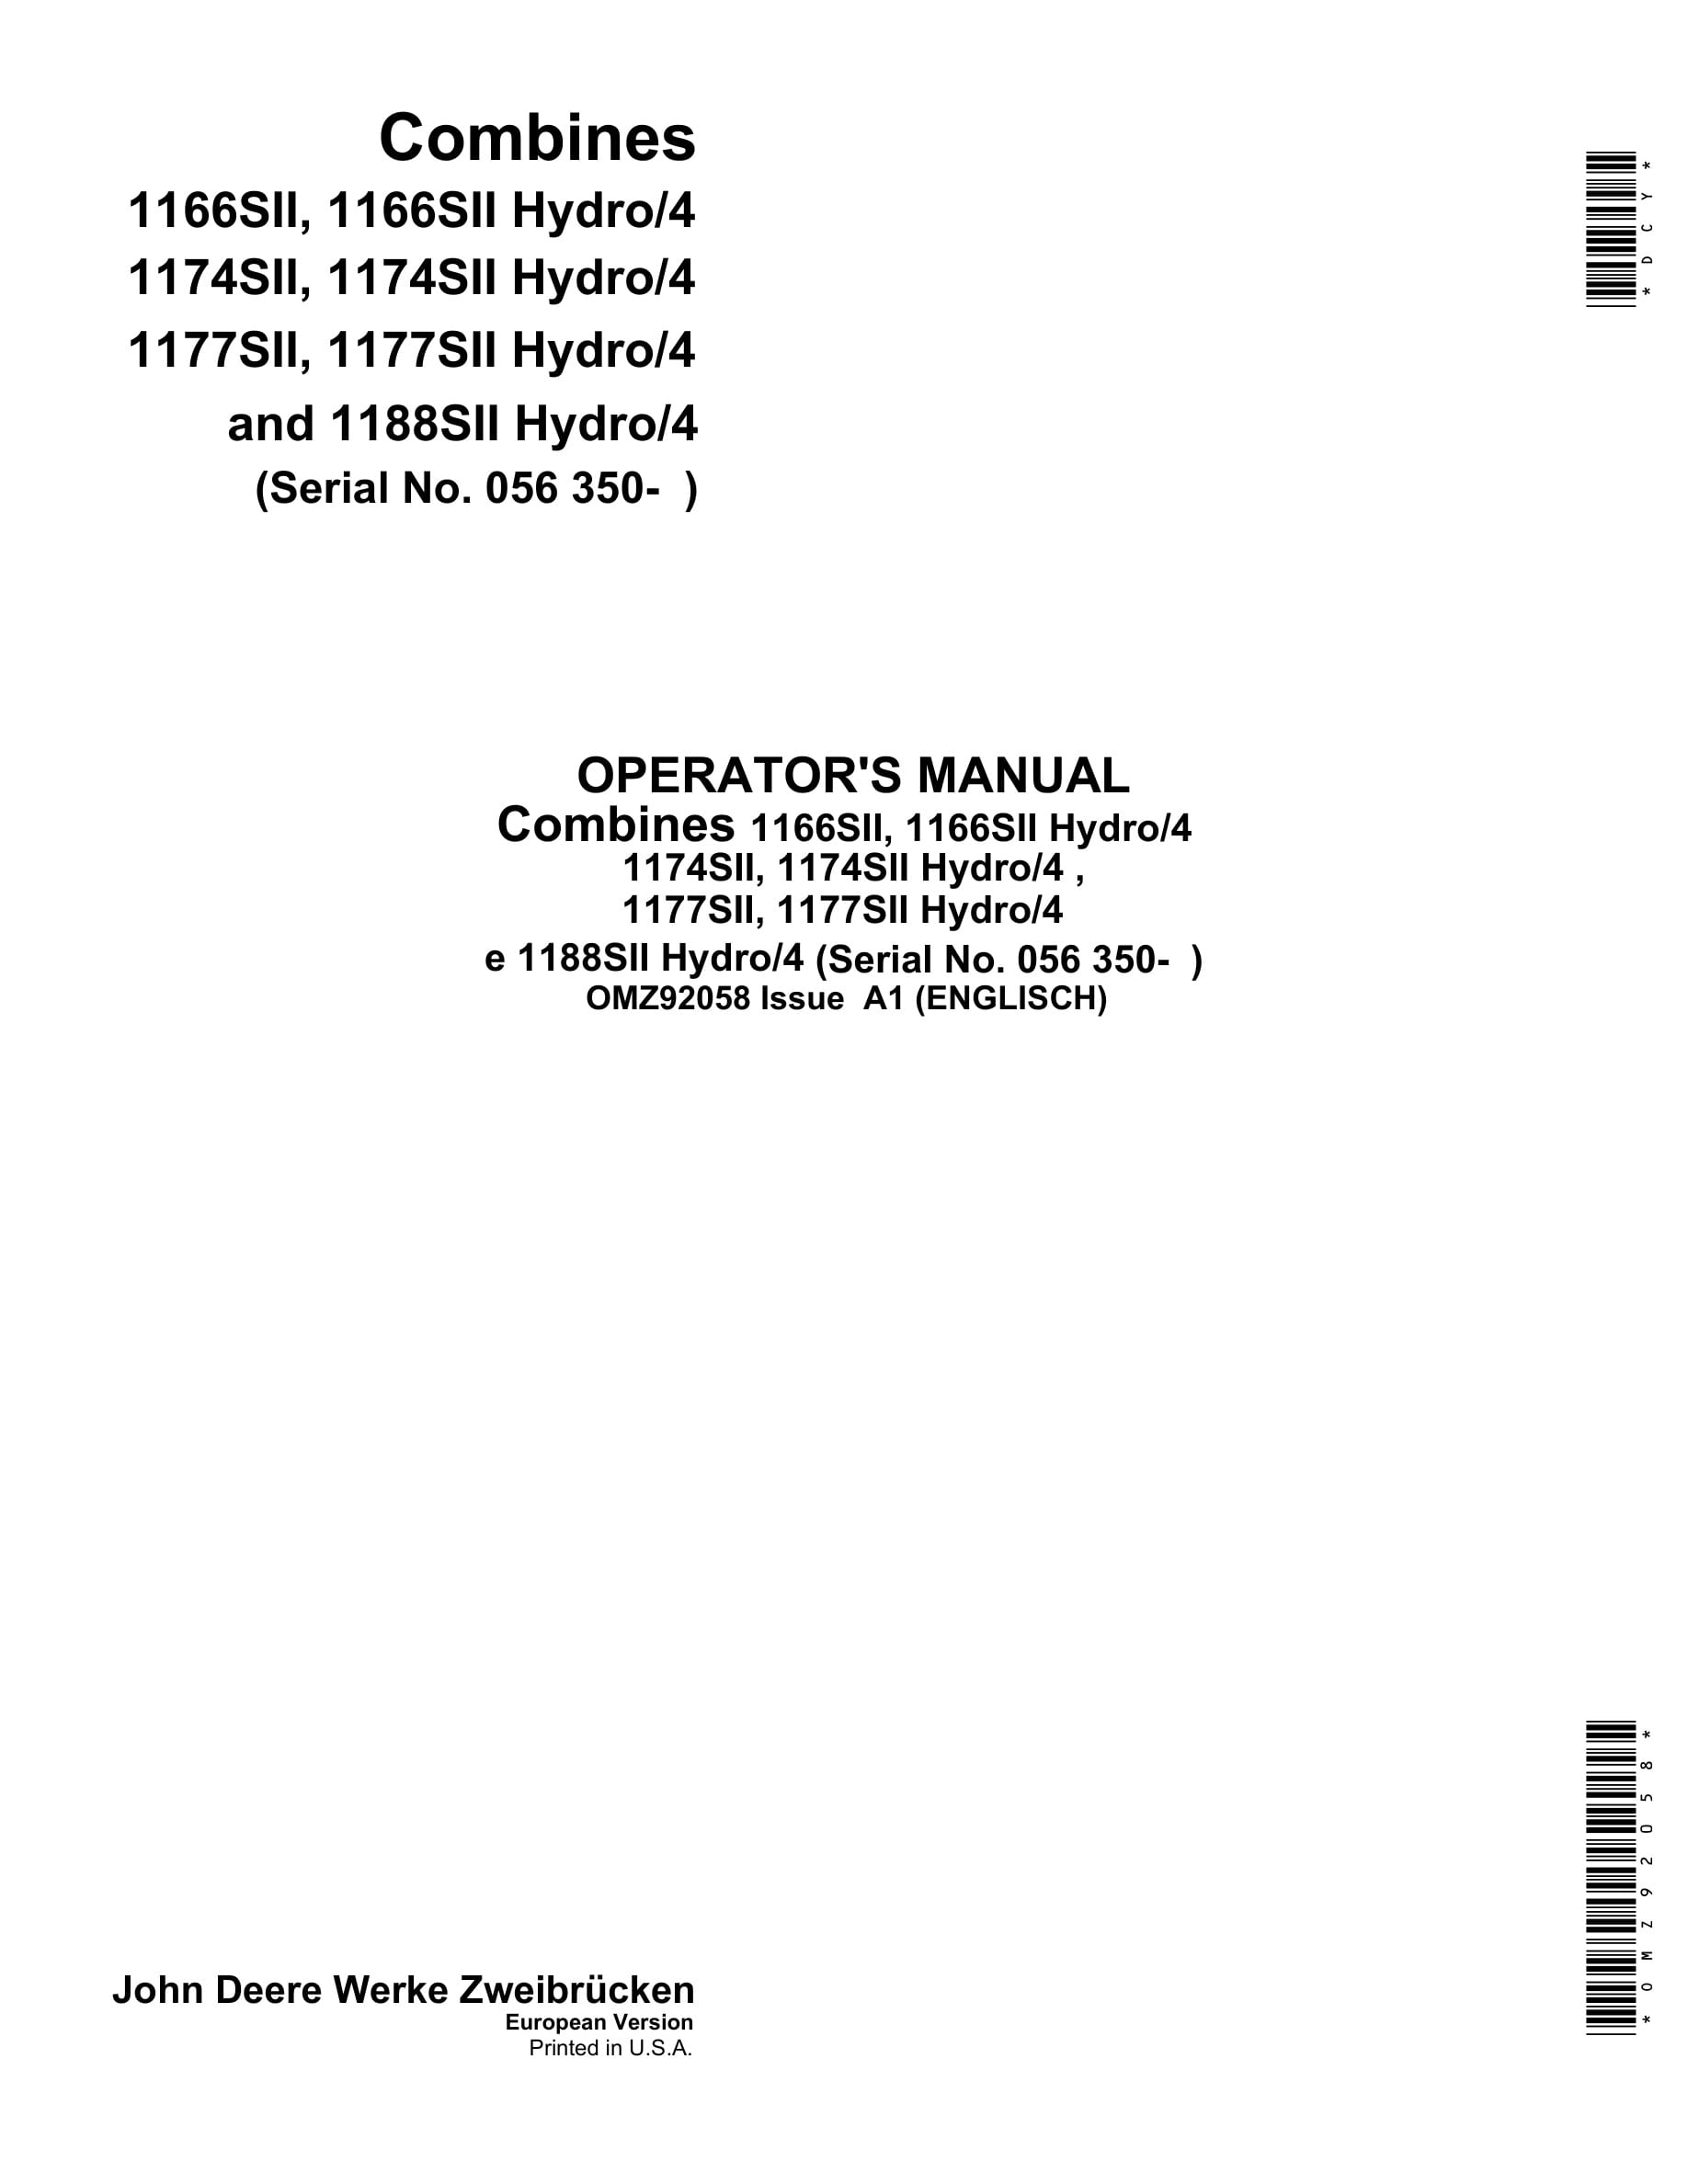 John Deere 1166SII, 1166SII Hydro 4 1174SII, 1174SII Hydro 4 1177SII, 1177SII Hydro 4 and 1188SII Hydro 4 Combine Operator Manual OMZ92058-1